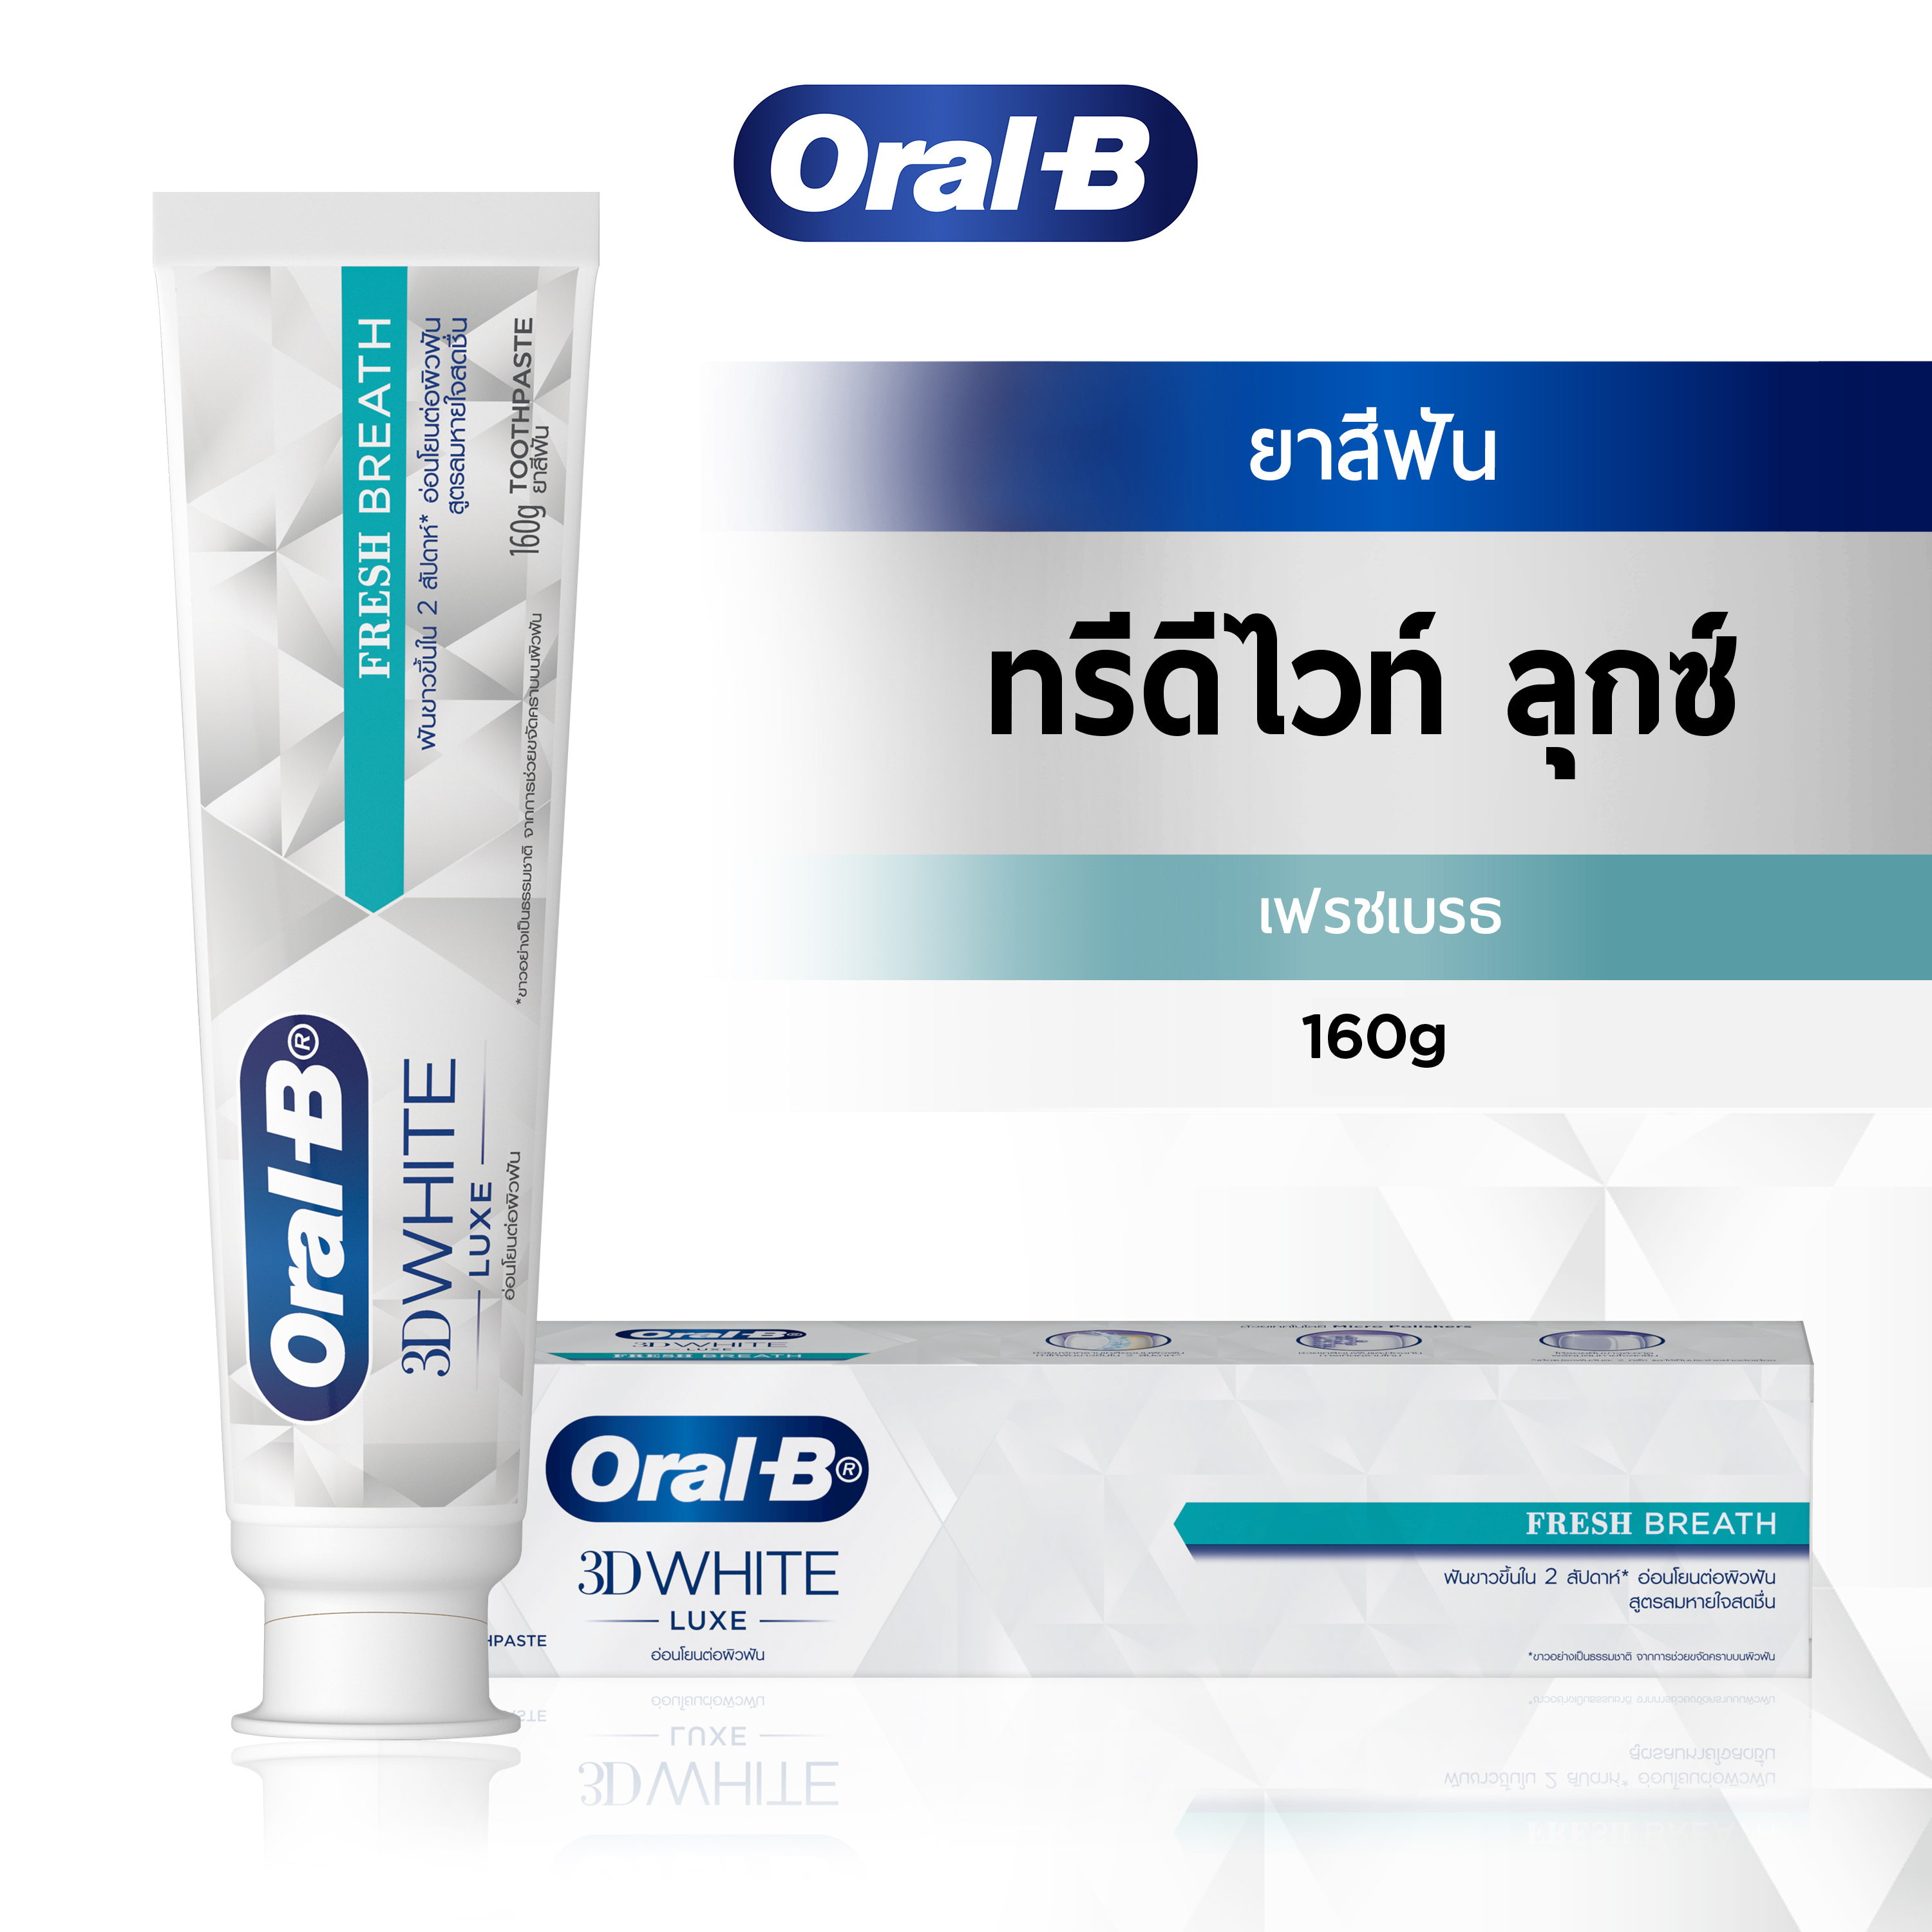 Oral-B ออรัลบี ยาสีฟัน ทรีดีไวท์ ลุกซ์ สูตรลมหายใจหอมสดชื่น  160กรัม Oral-B 3D White Luxe Fresh BreathToothpaste 160g